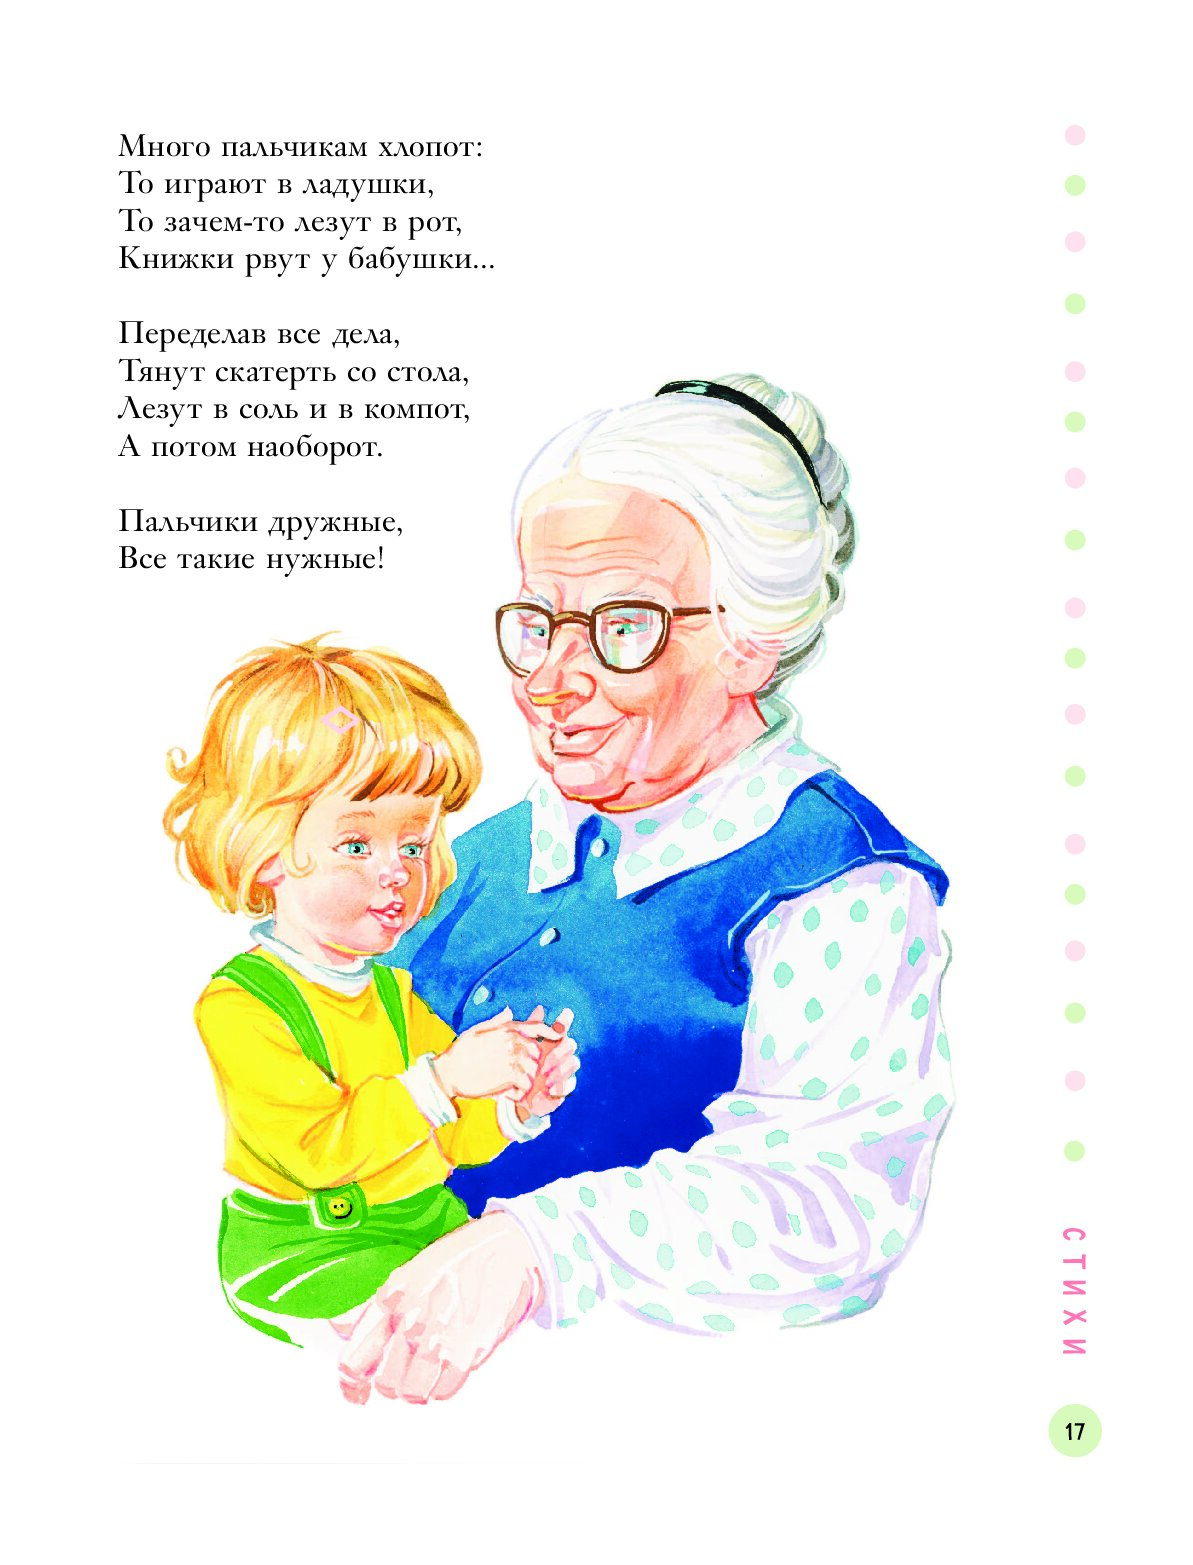 Читать стихи про бабушке